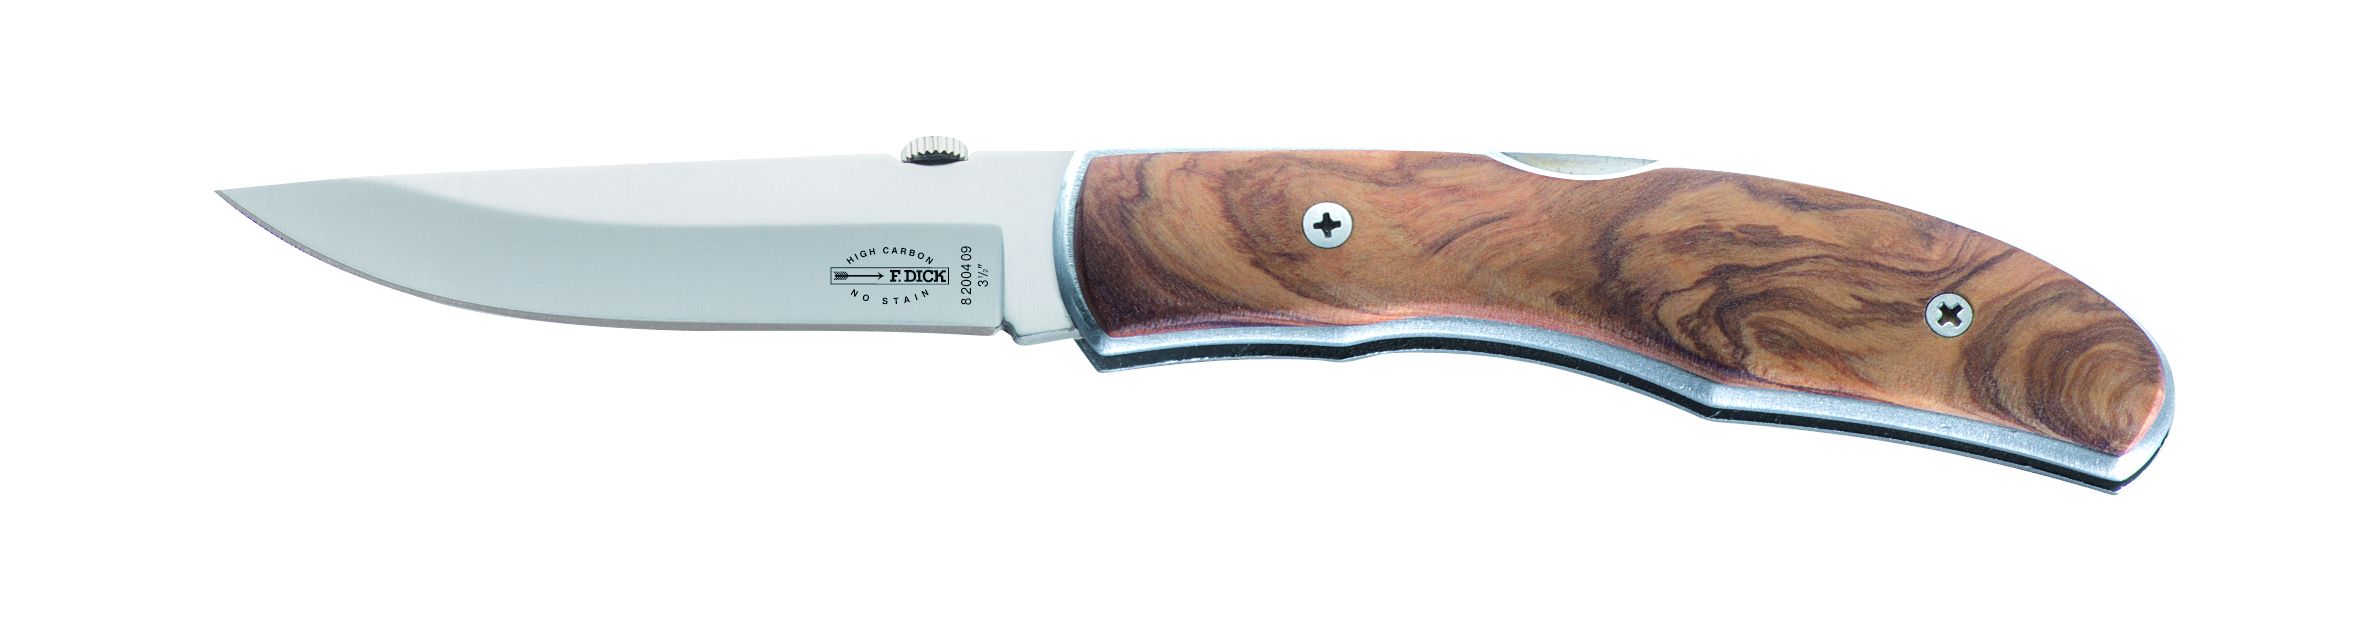 Taschenmesser 9cm mit Olivenholzgriff VC1290